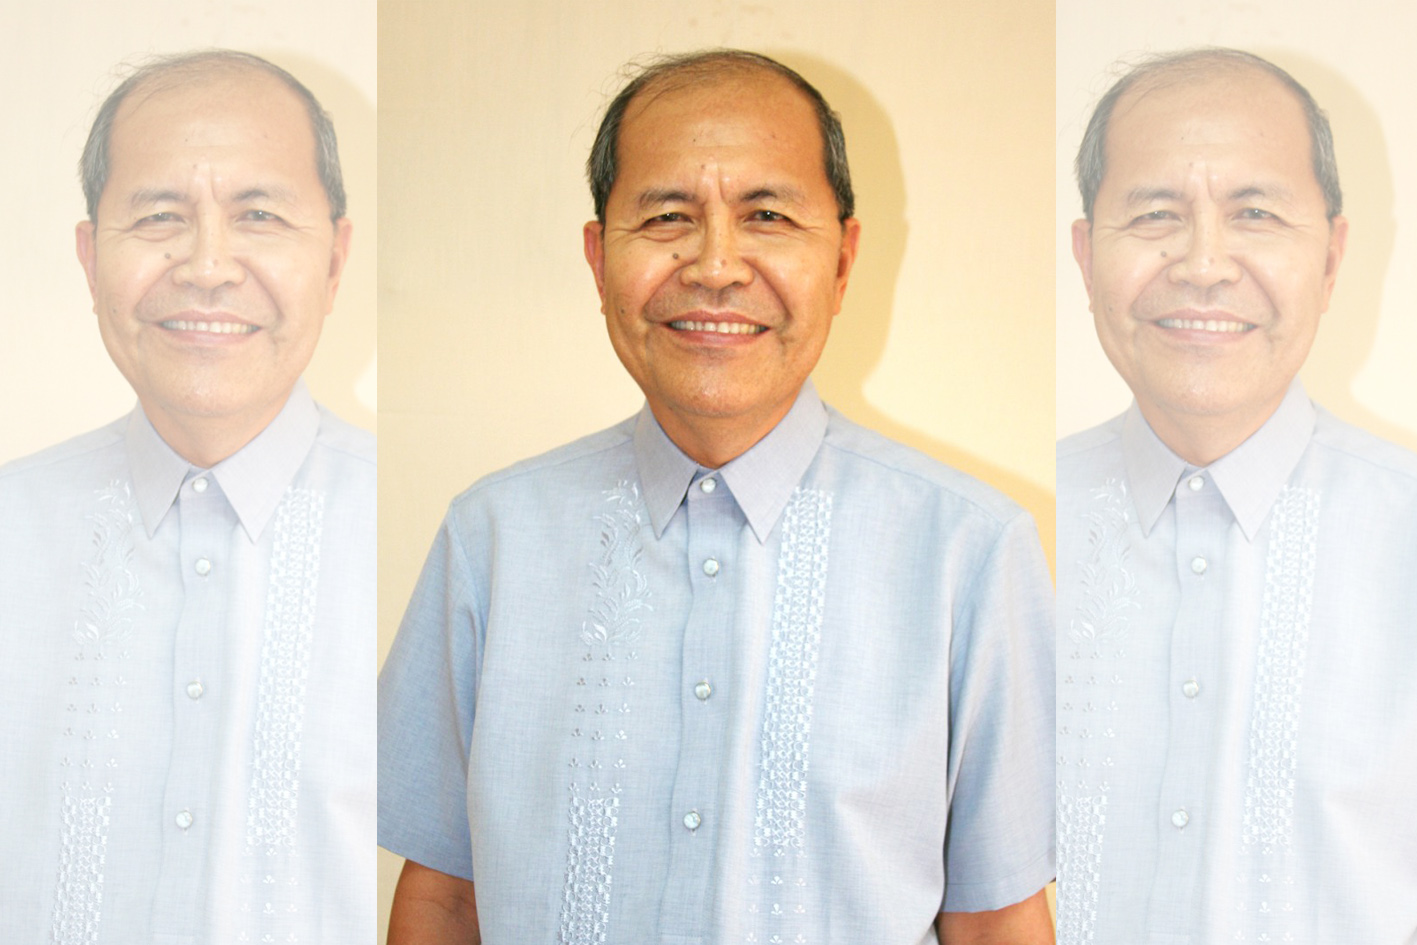 Apostolic administrator named for Calapan